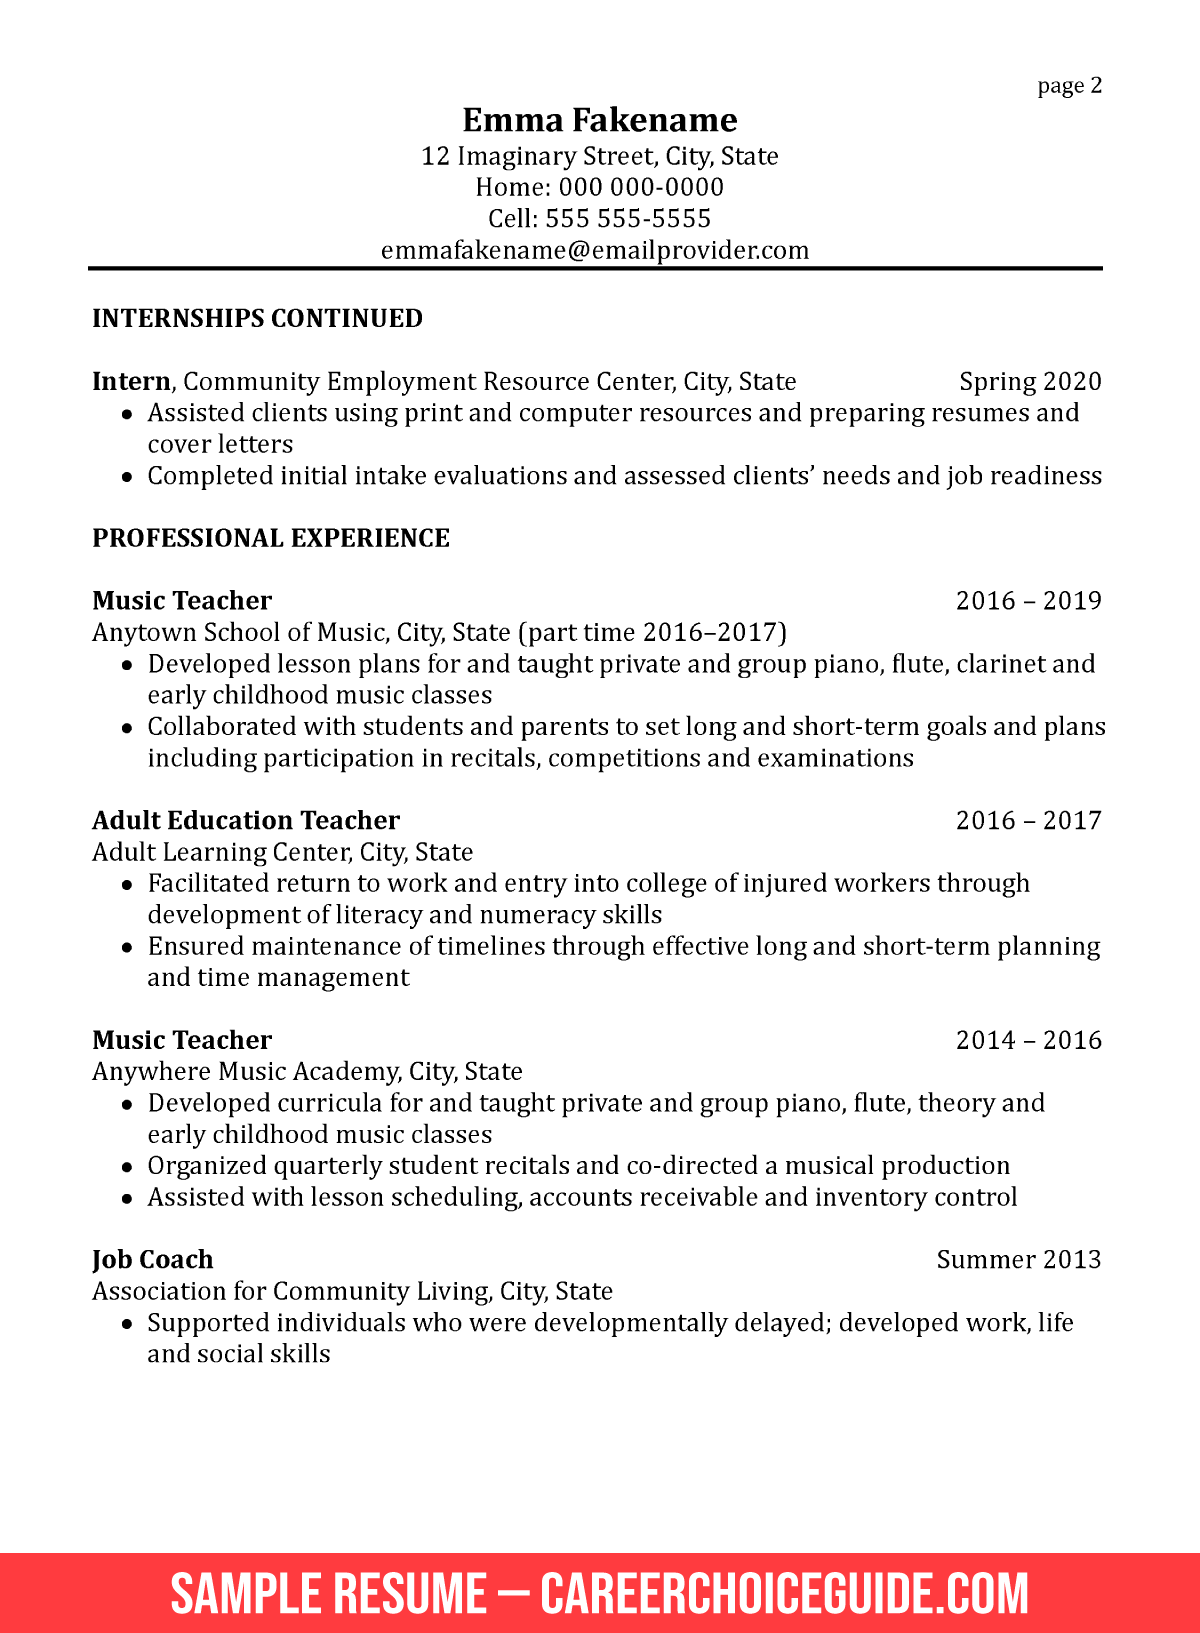 change career resume sample